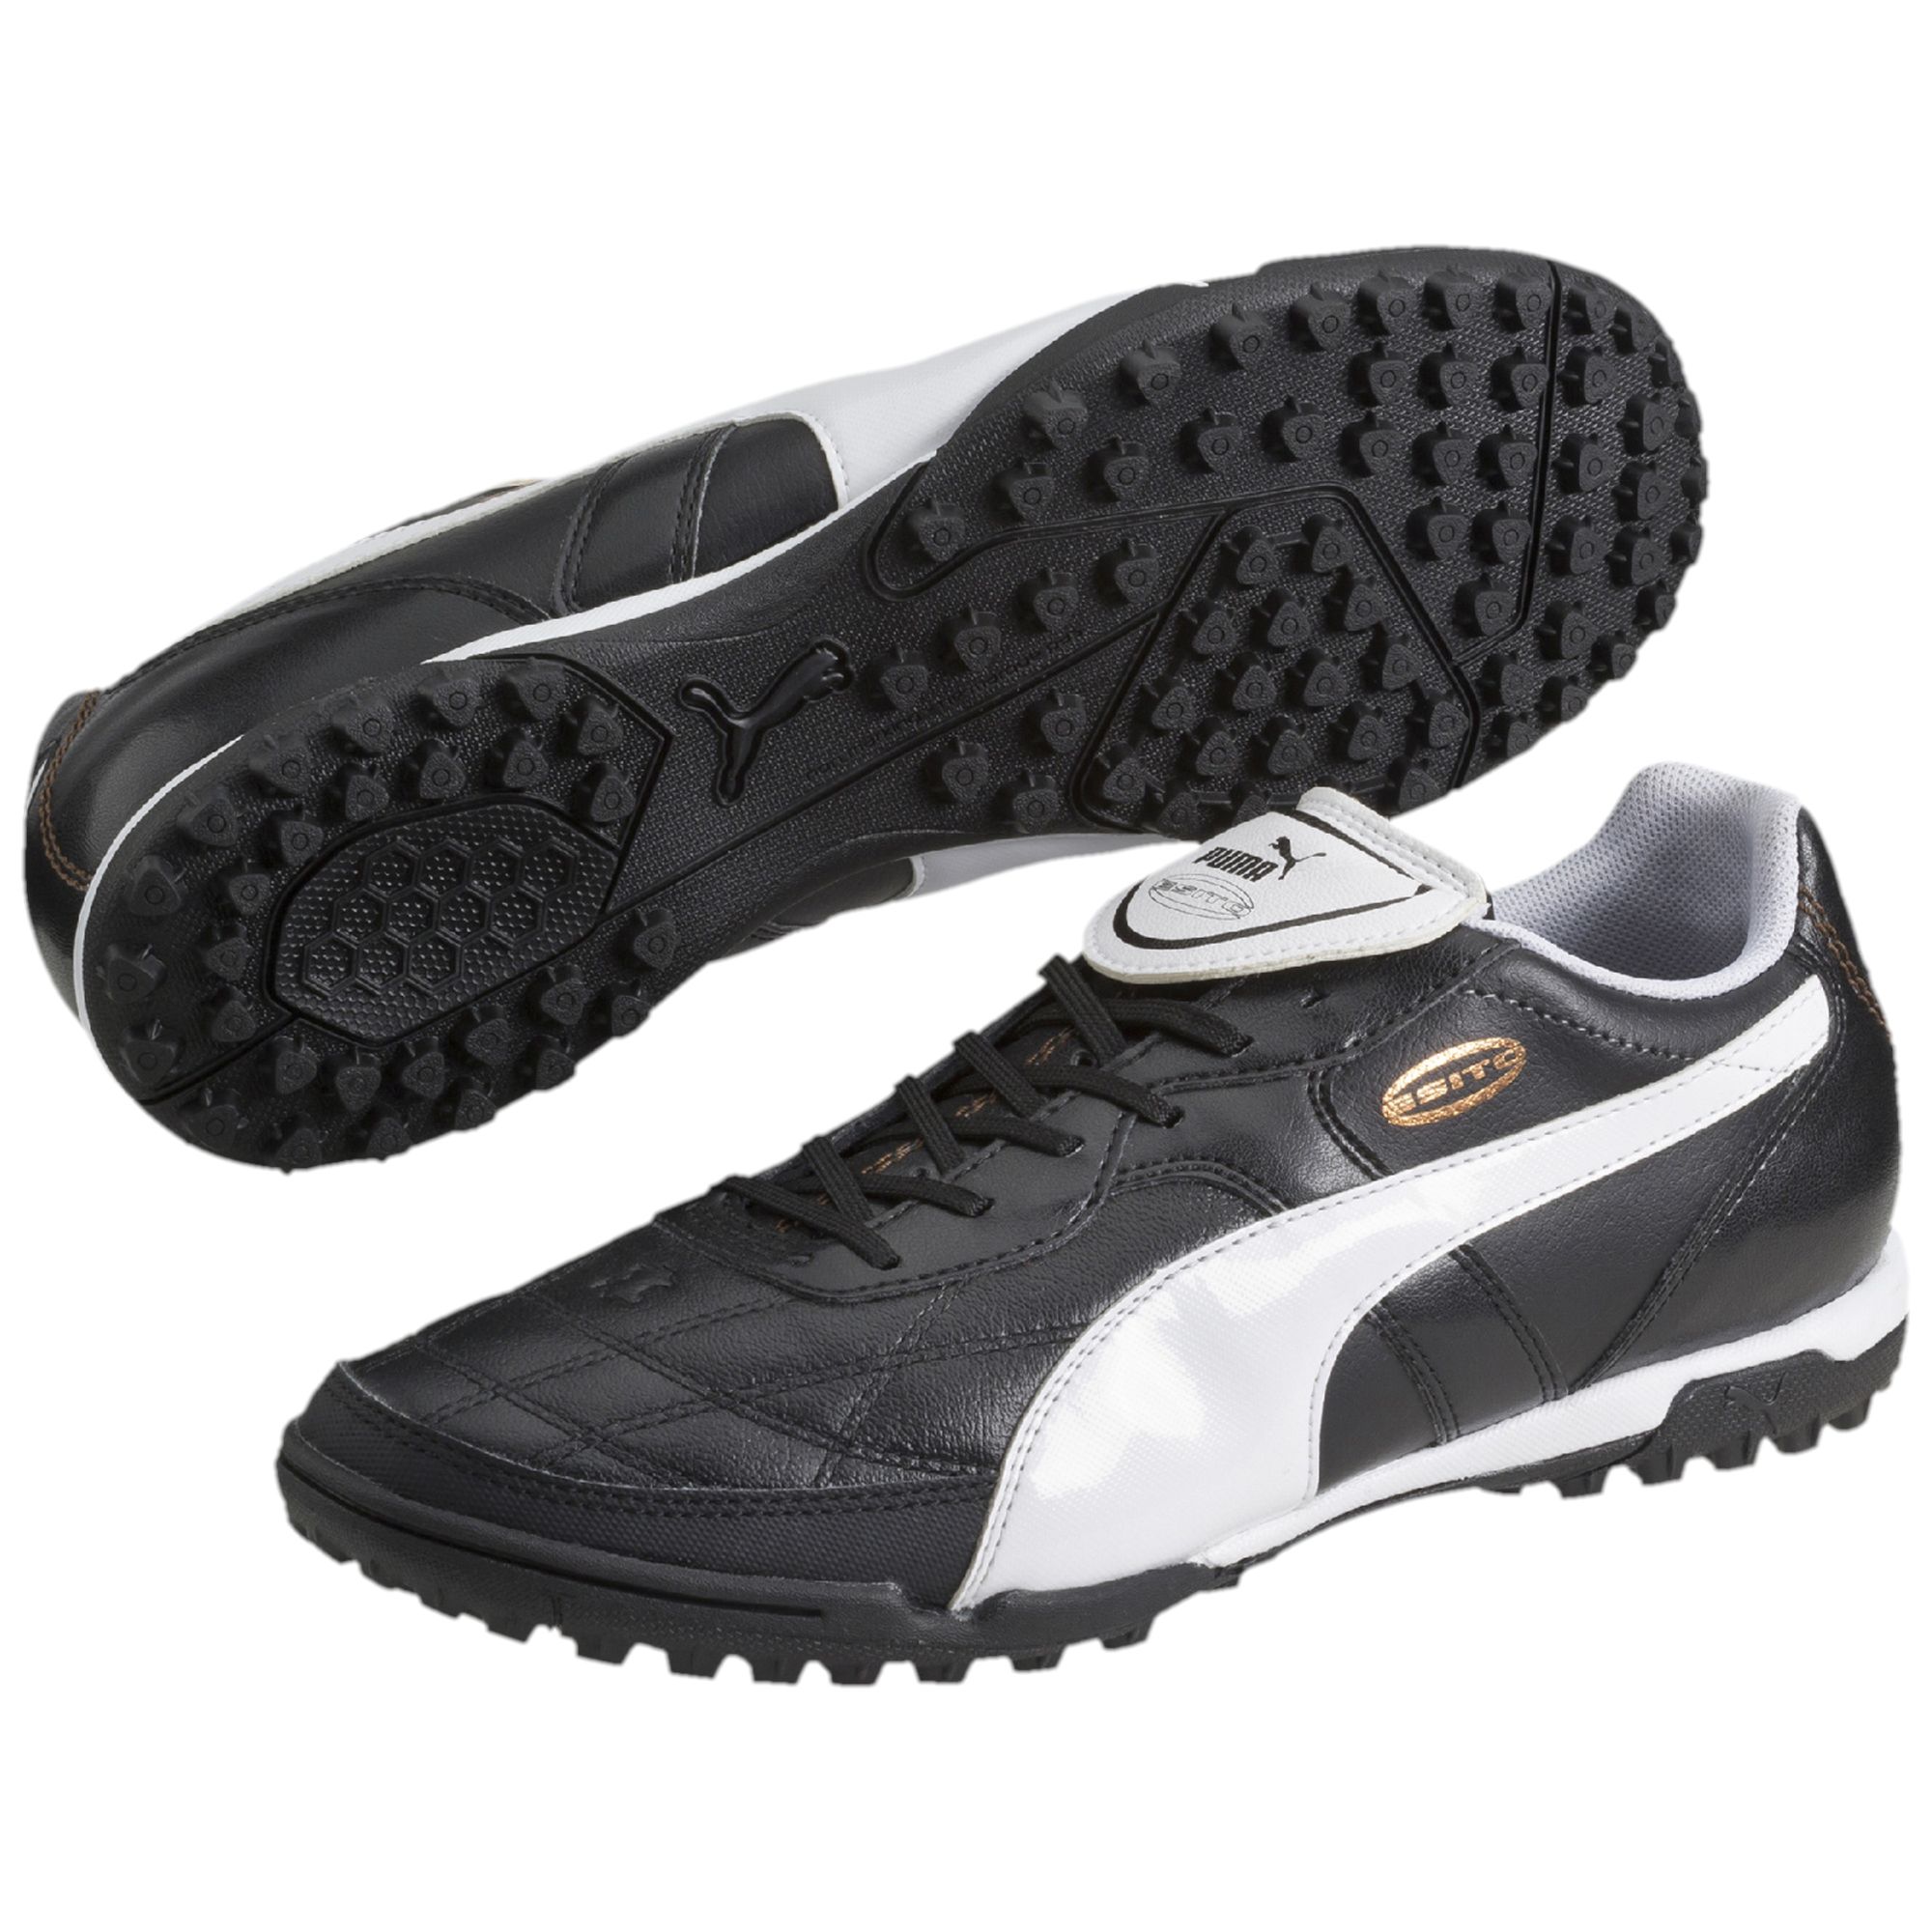 PUMA Esito Classico TT Football Boots Hombre Zapatos Fútbol Nuevo | eBay